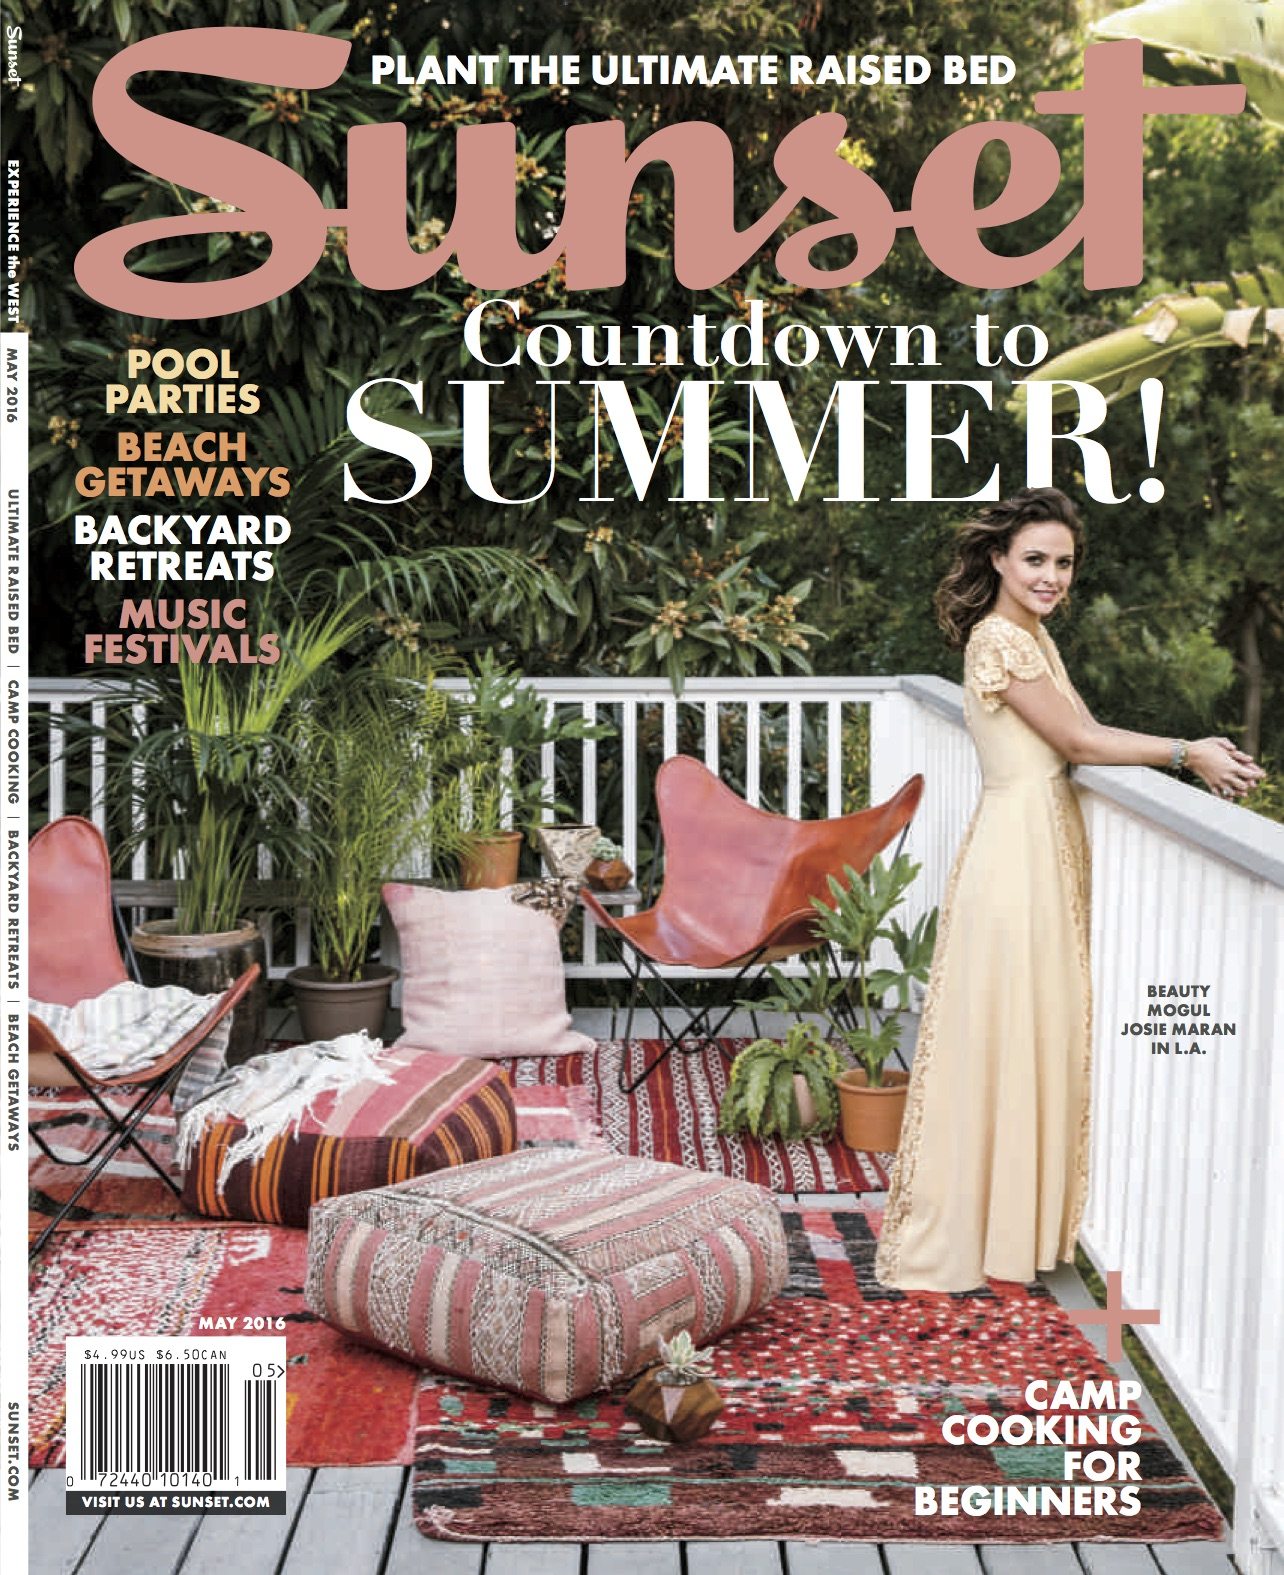 Sunset May 2016 magazine cover